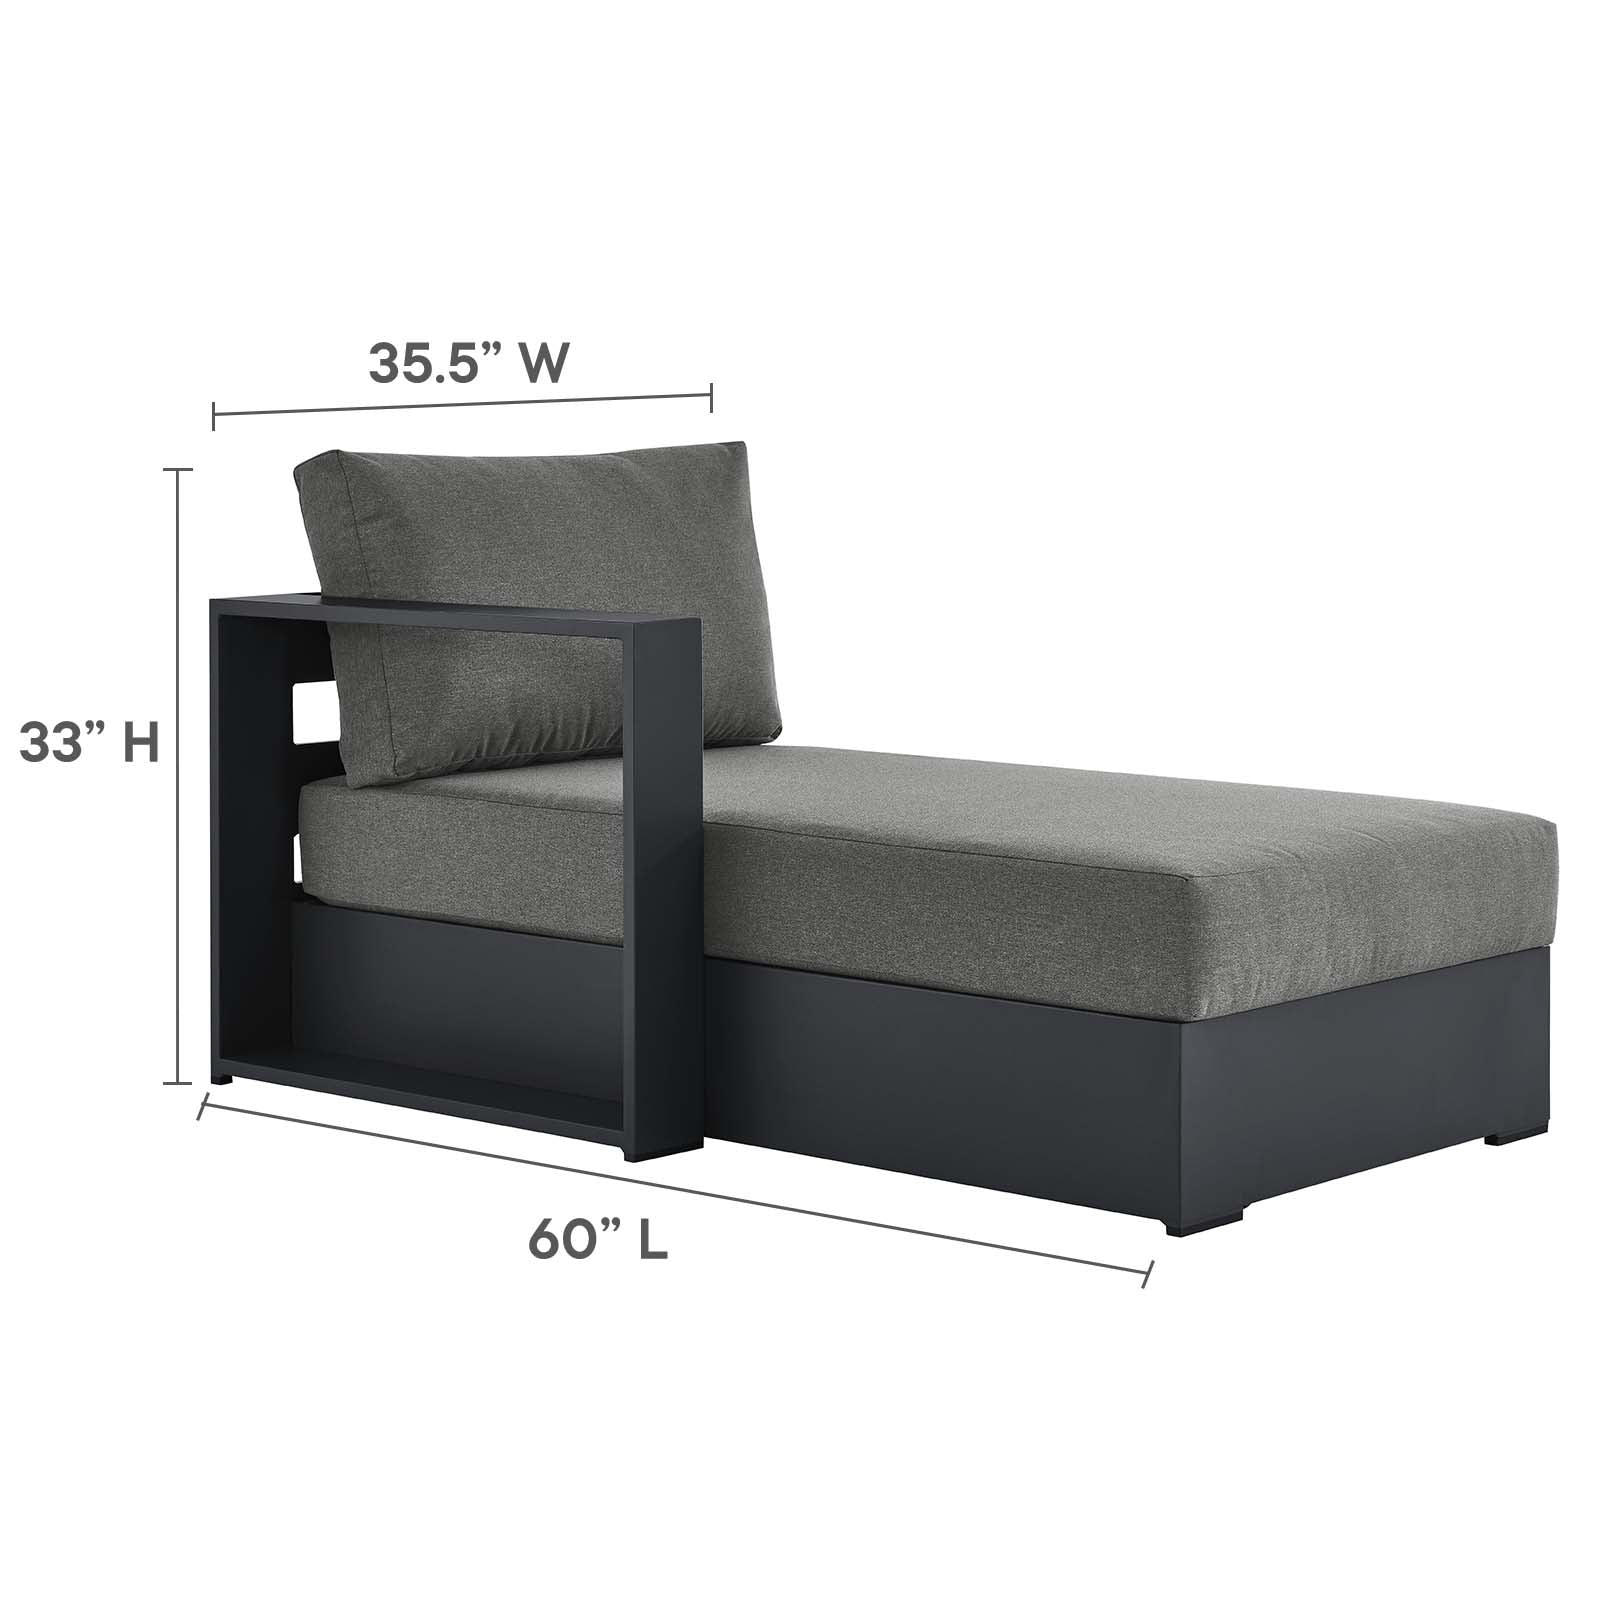 Tahoe Outdoor Patio Powder-Coated Aluminum Modular Left-Facing Chaise Lounge - East Shore Modern Home Furnishings